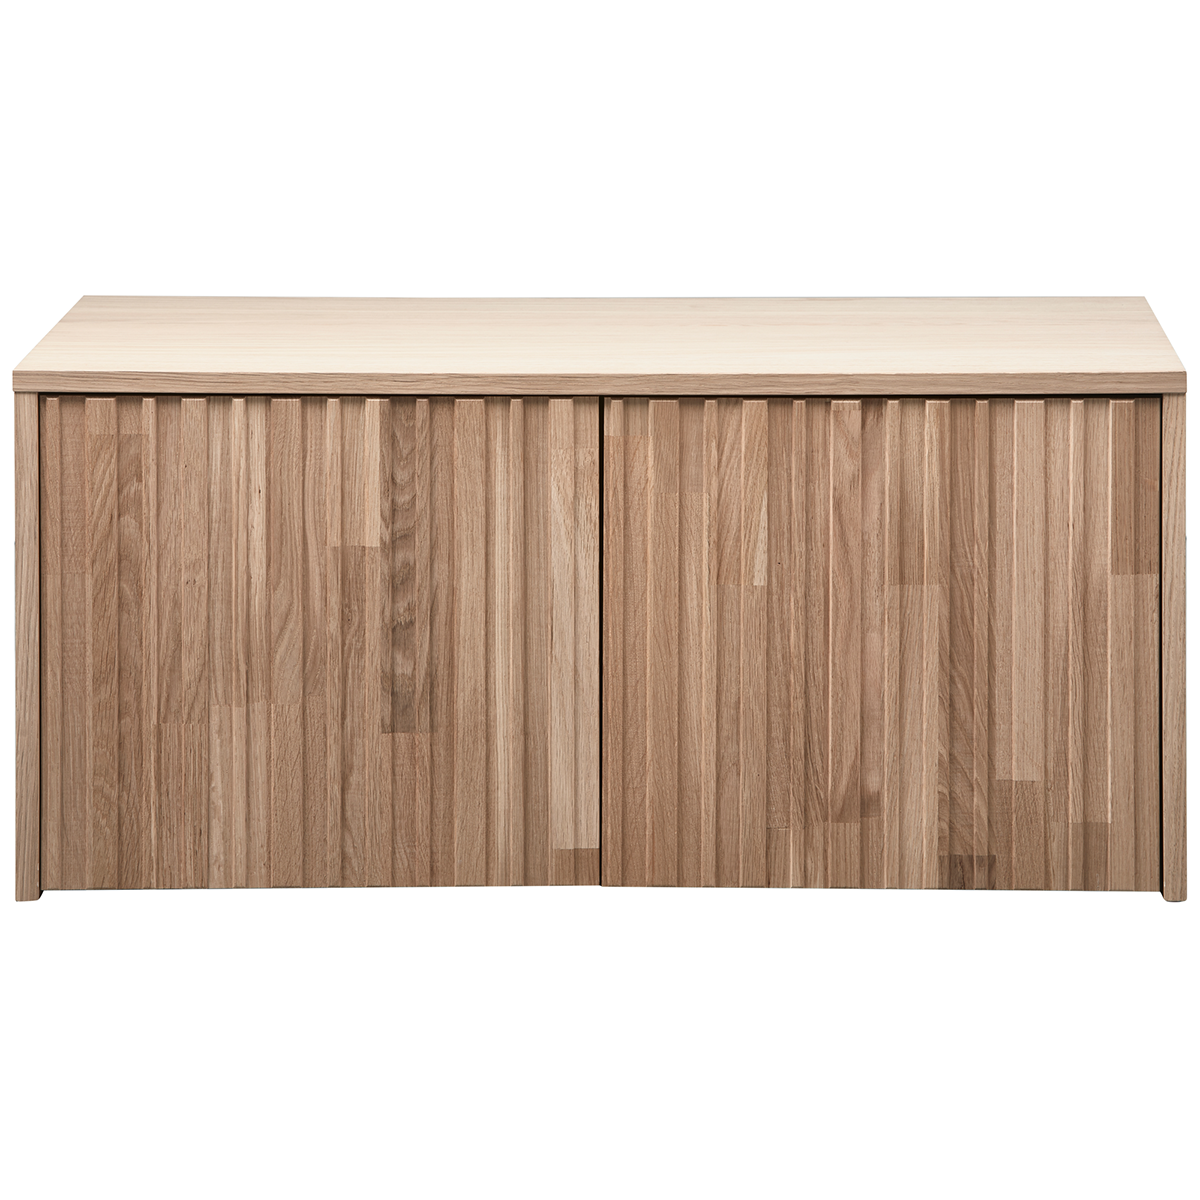 New Gravure Wood Storage Bench